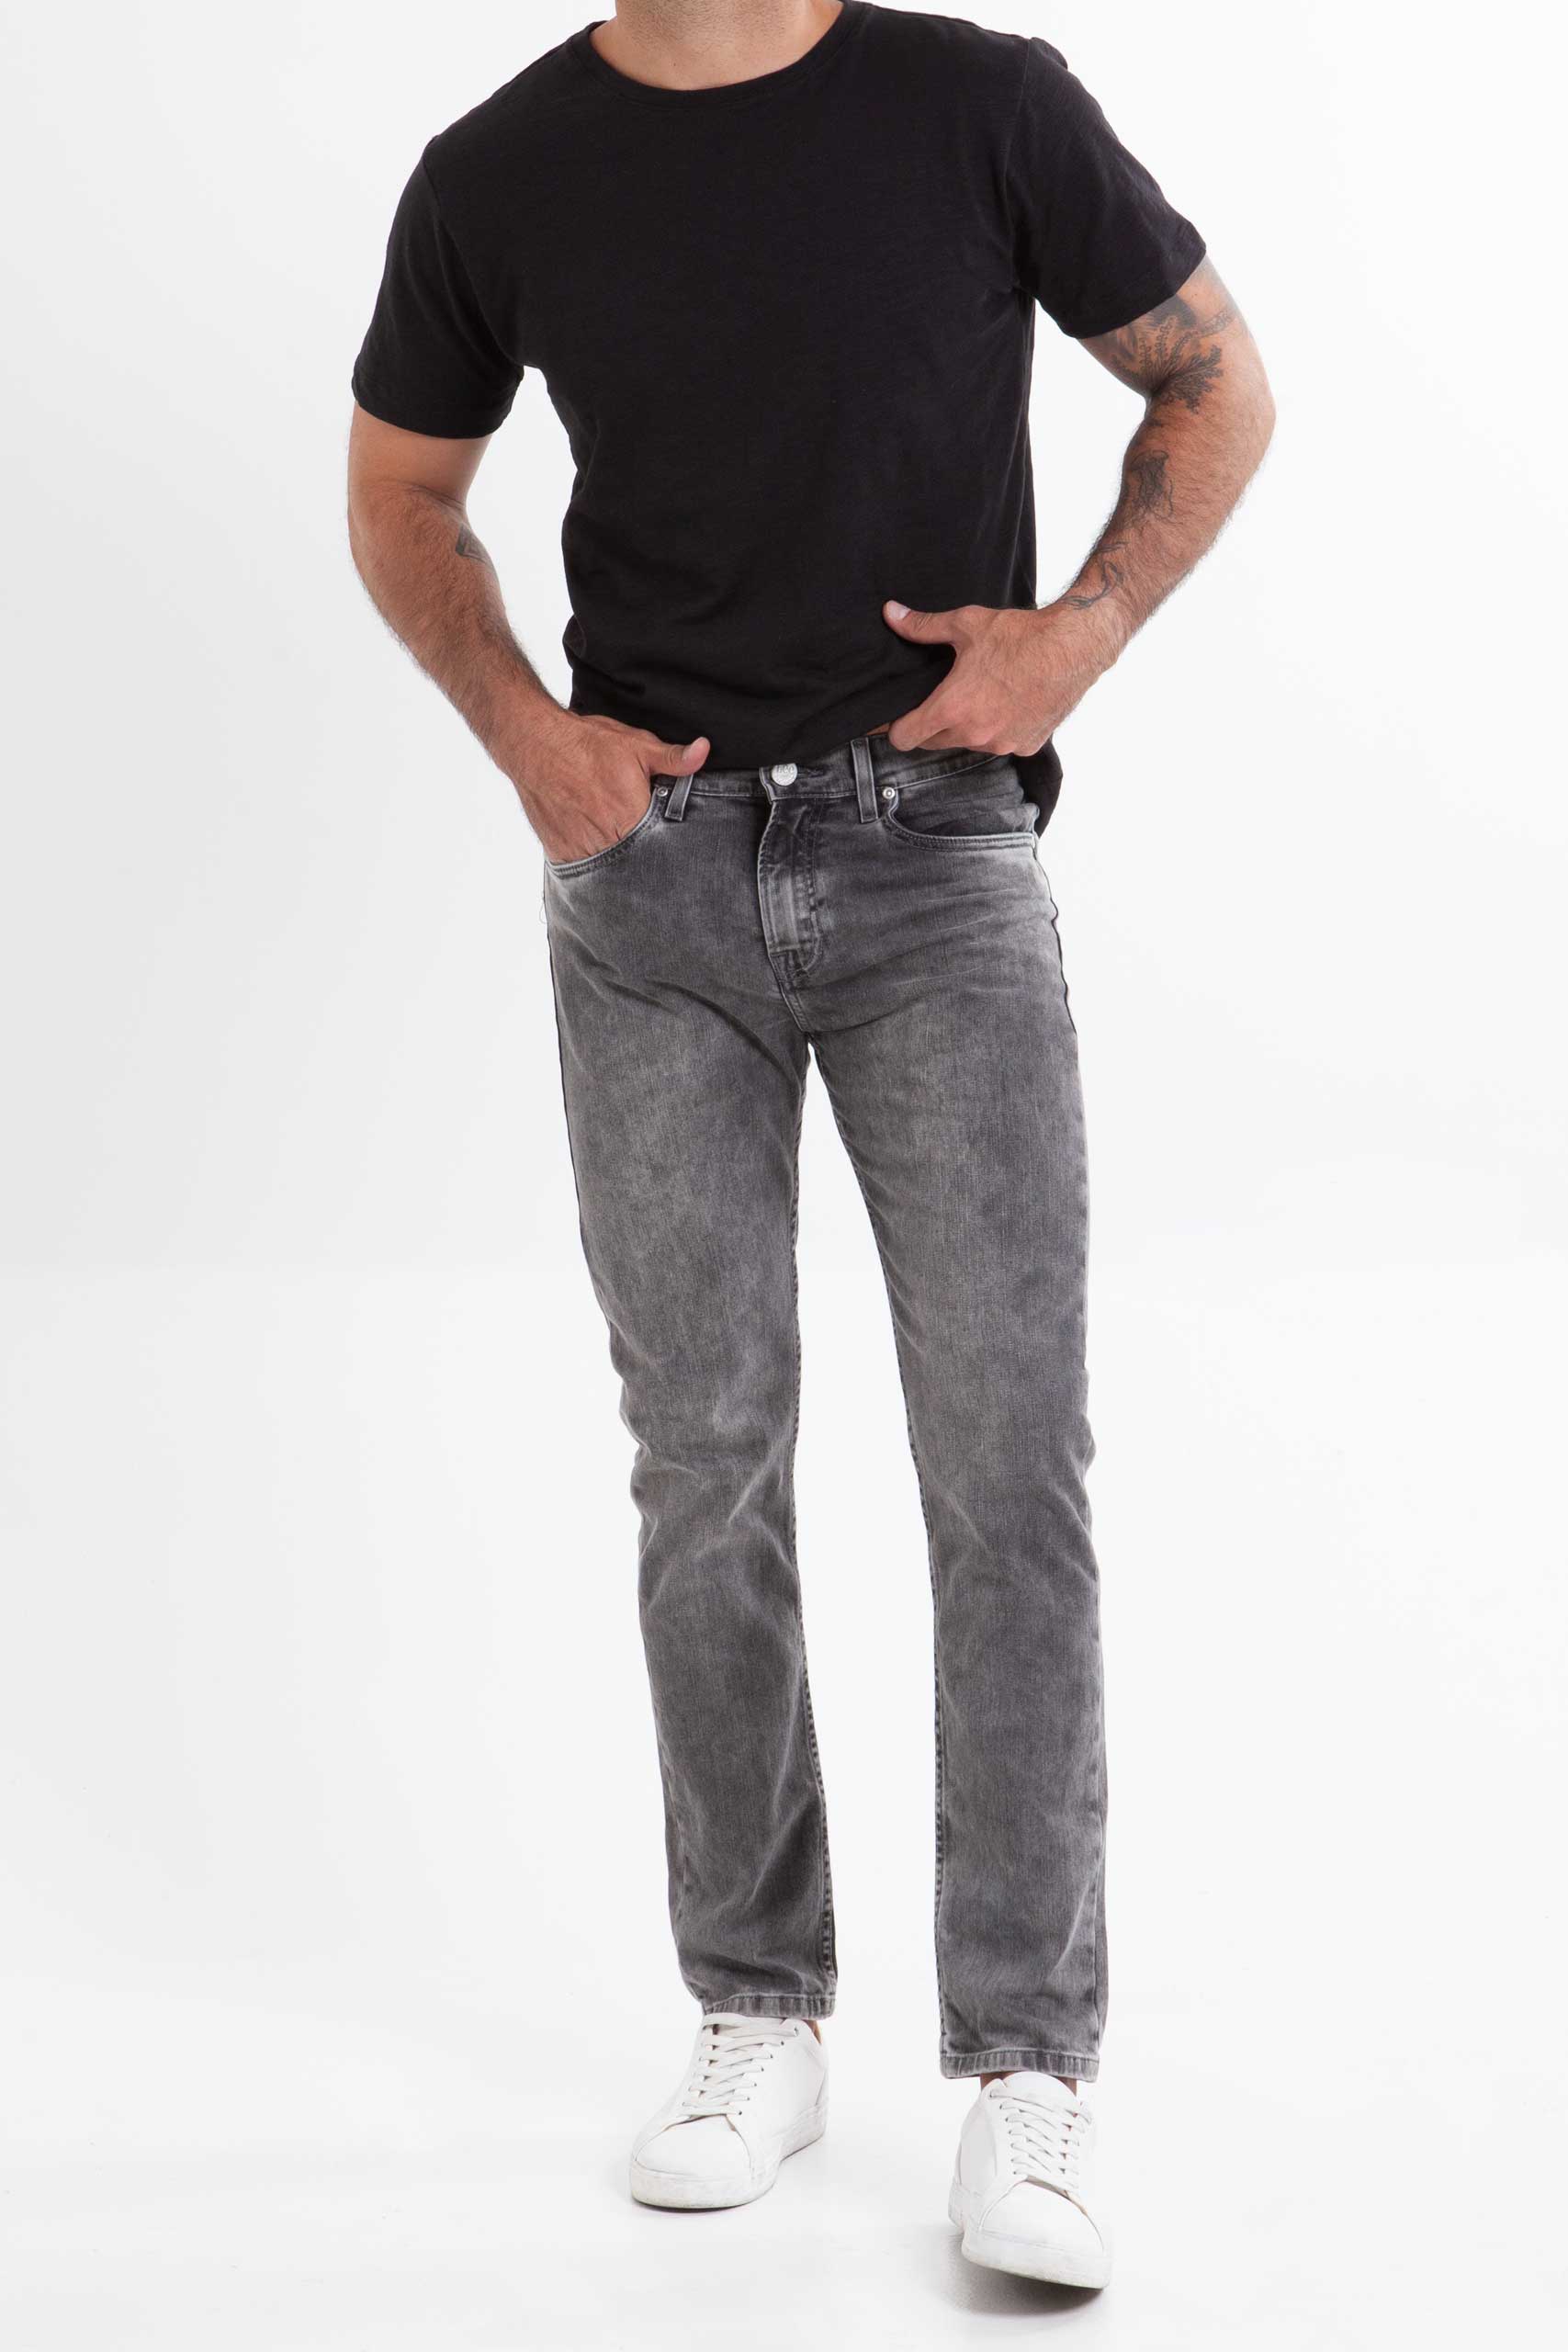 Vista frontal Jean de color pepper de marca lee